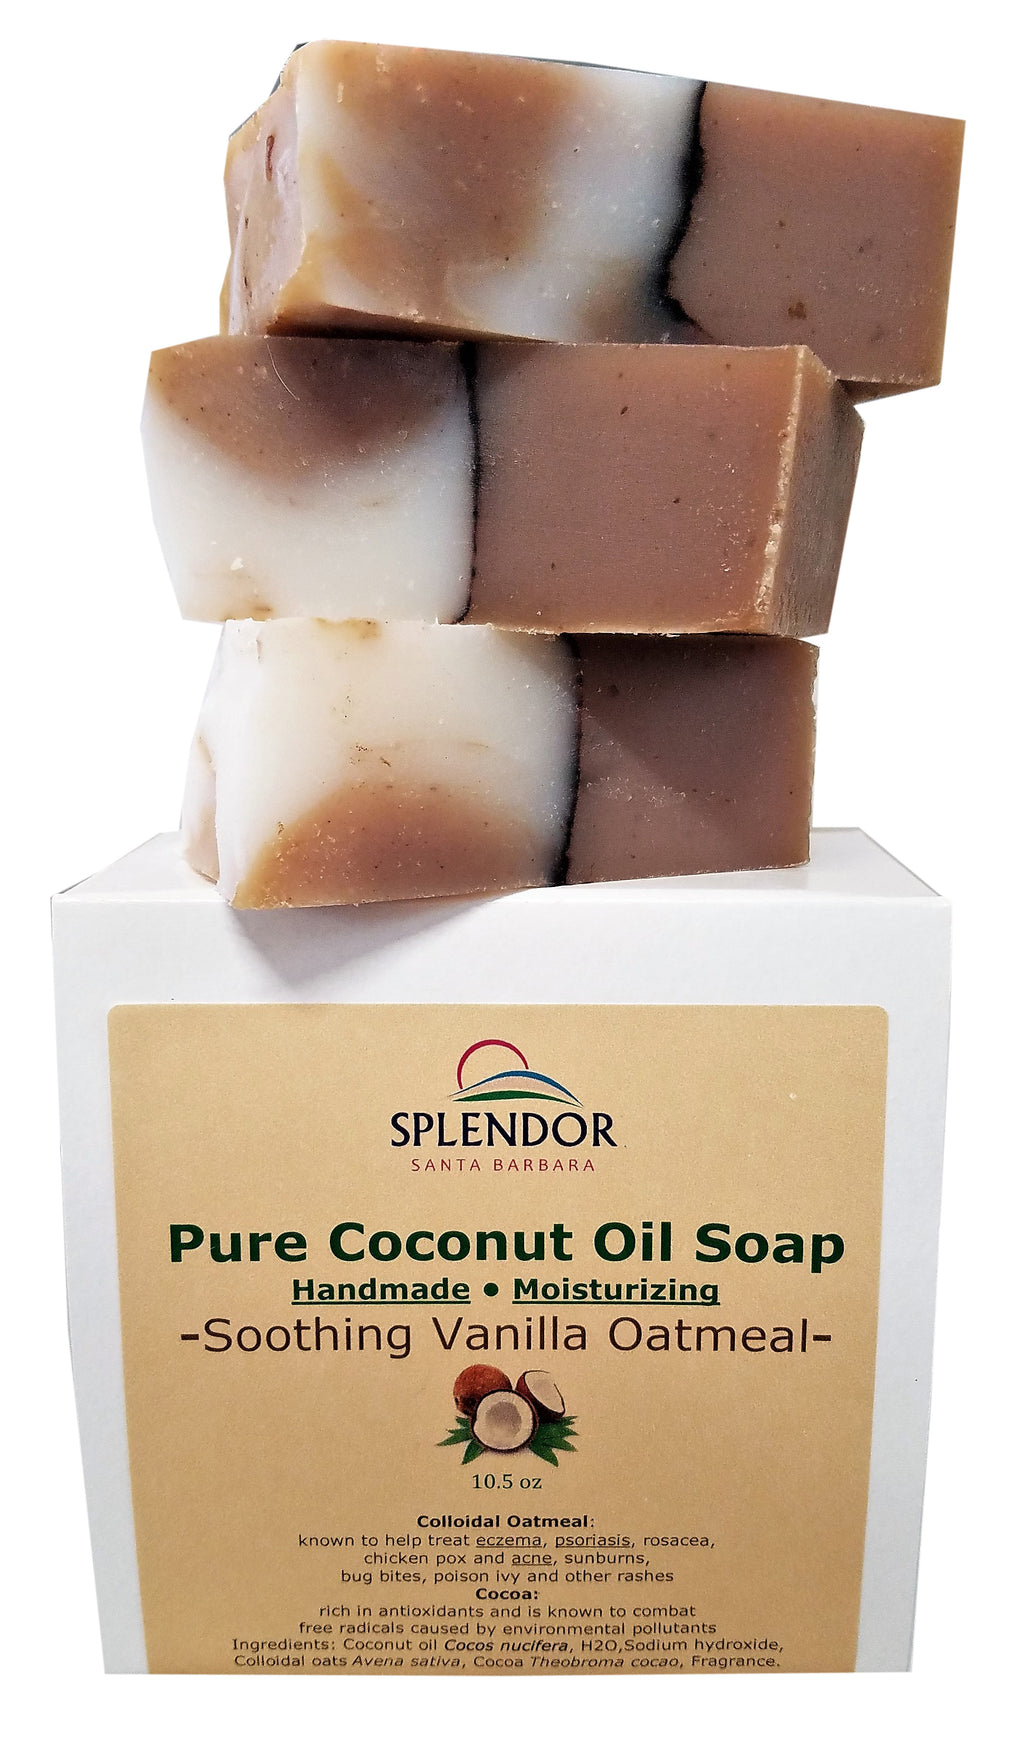 Splendor Soothing Vanilla Oatmeal Soap- Natural Coconut Oil Hand, Face & Body. Handmade, Vegan, Moisturizing, with Gluten-Free Oats and Antioxidant-Rich Cocoa